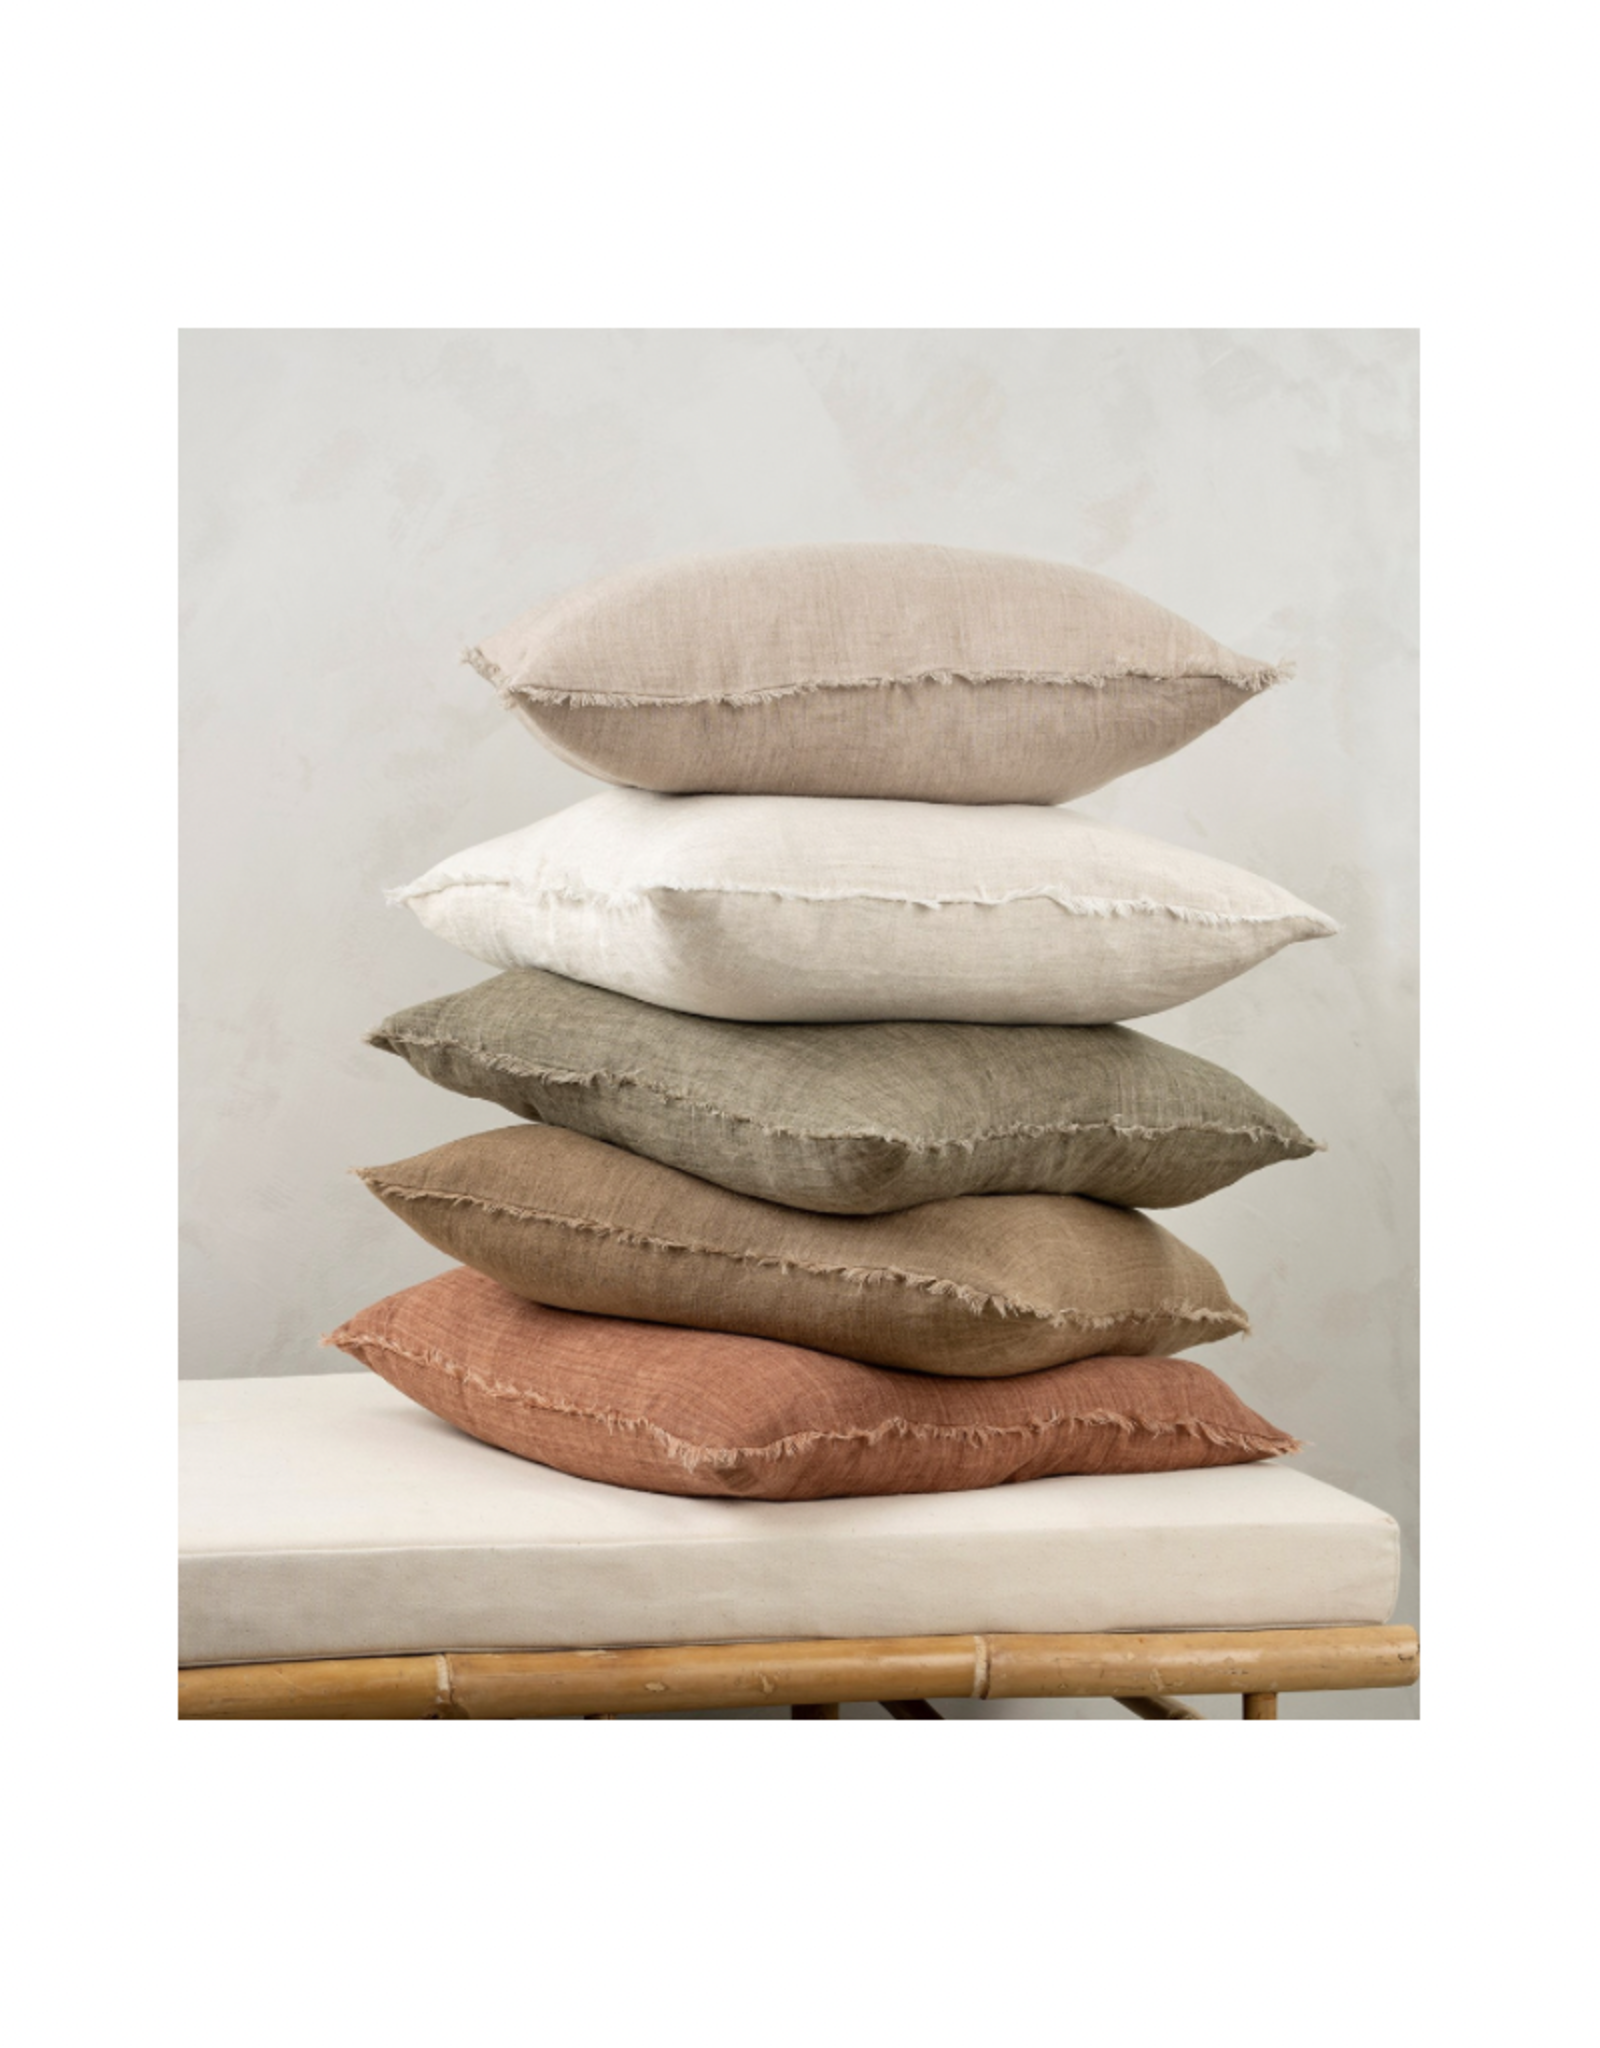 Indaba Cushions Indaba Lina Linen Oat 20 x 20 1-3088-C